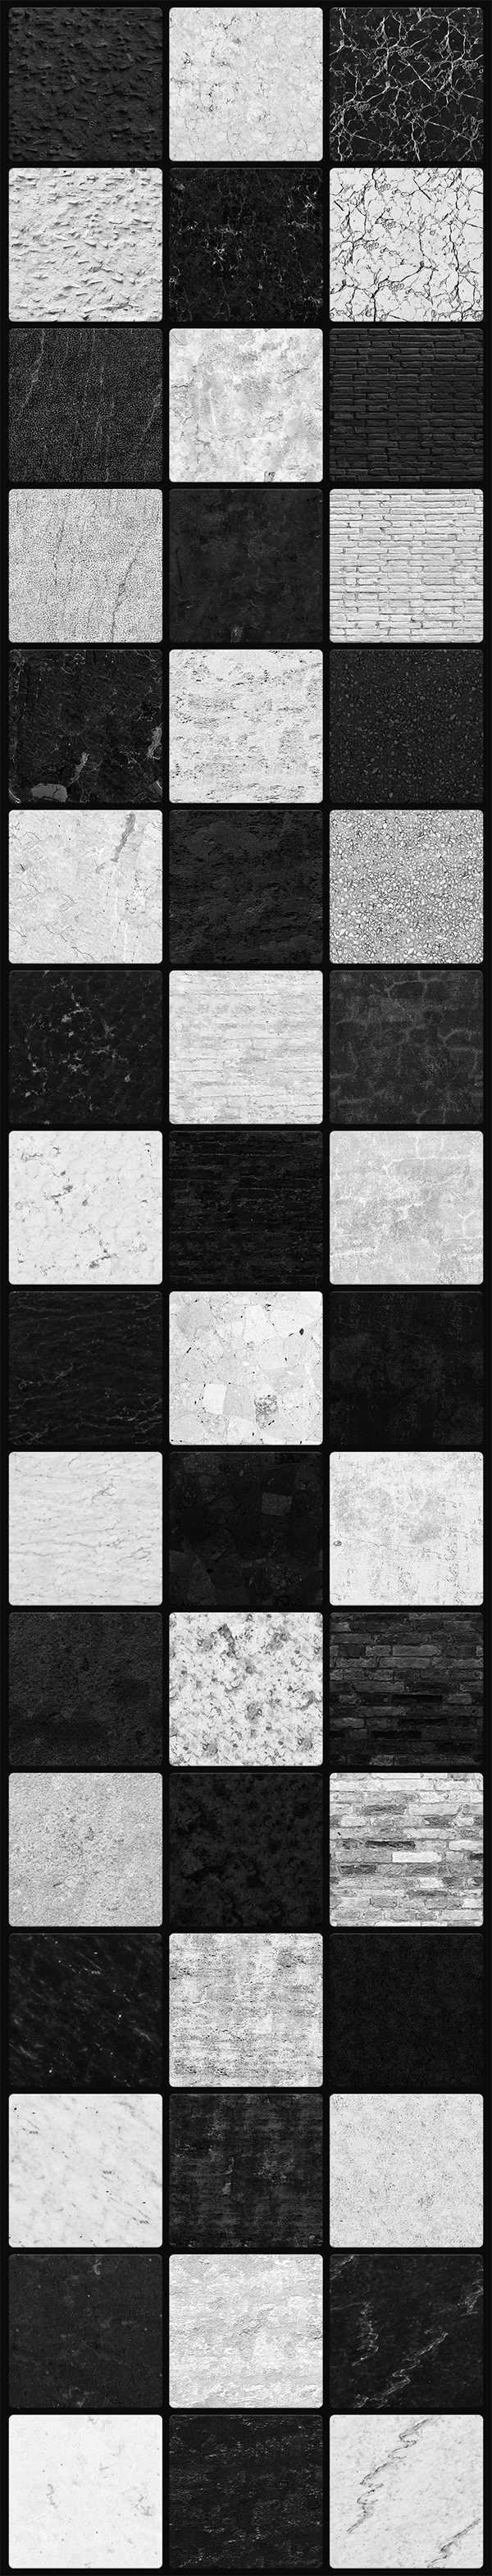 Black & White Awesome Textures